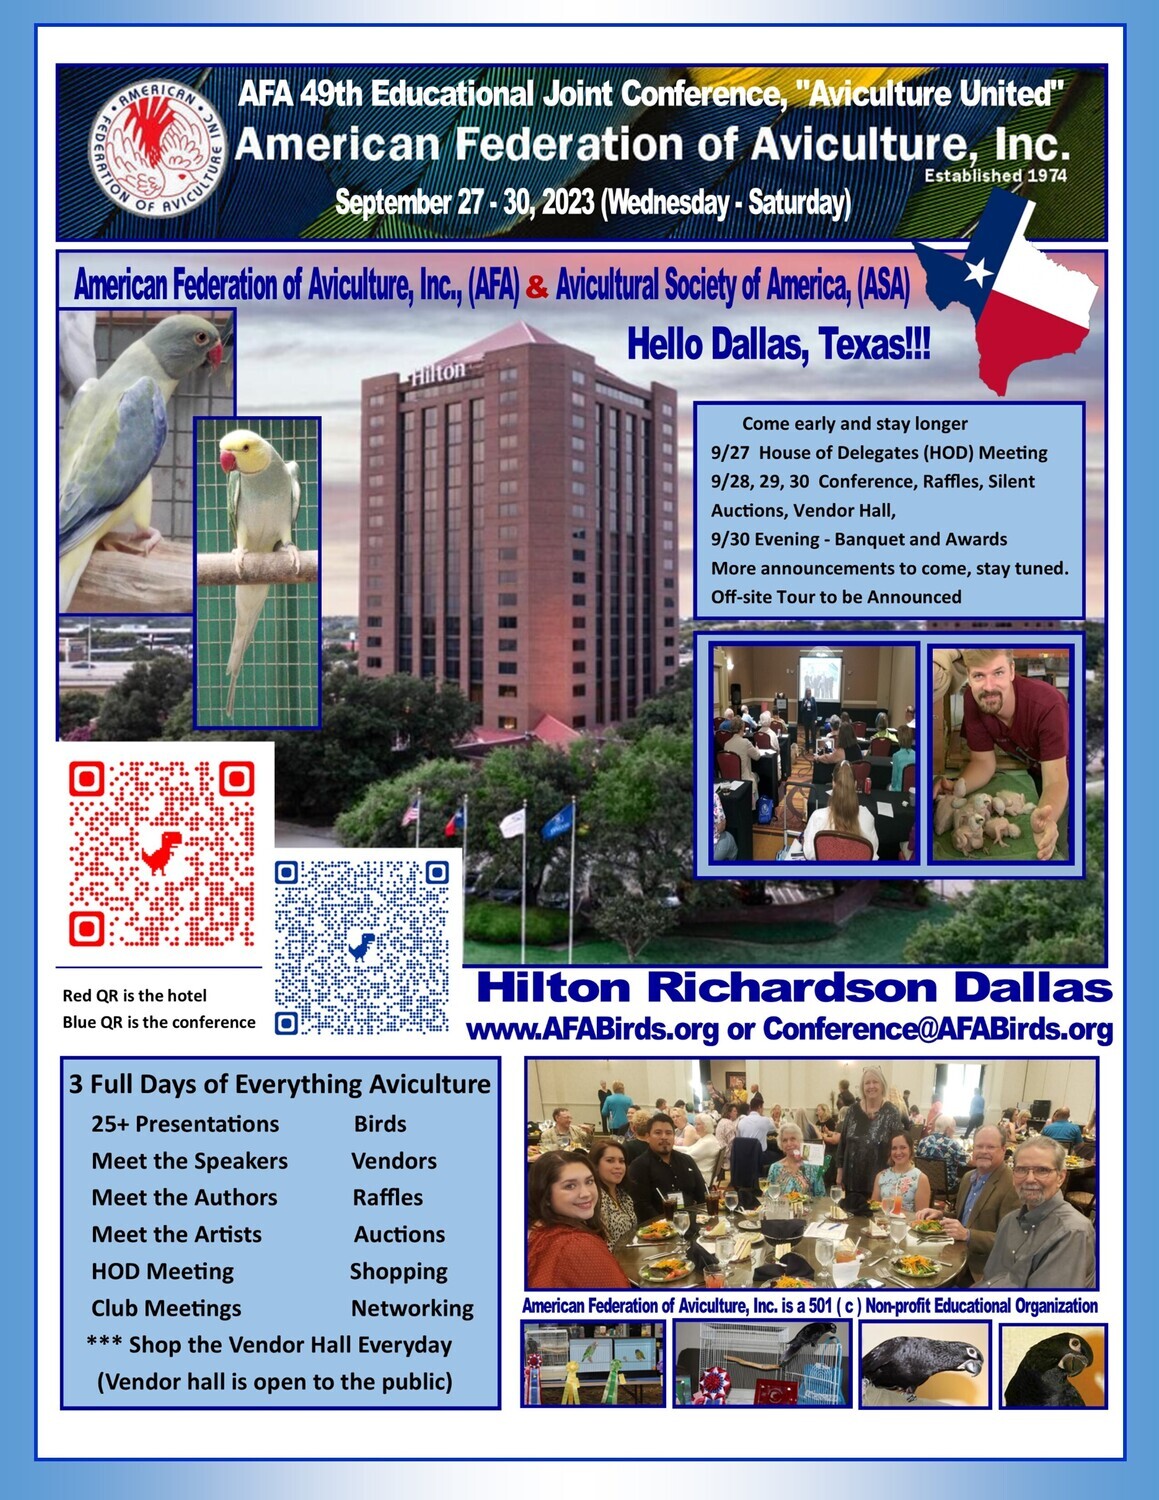 Vendor Sponsorship Registration for the AFA/ASA 2023 Educational Conference, Richardson, Texas